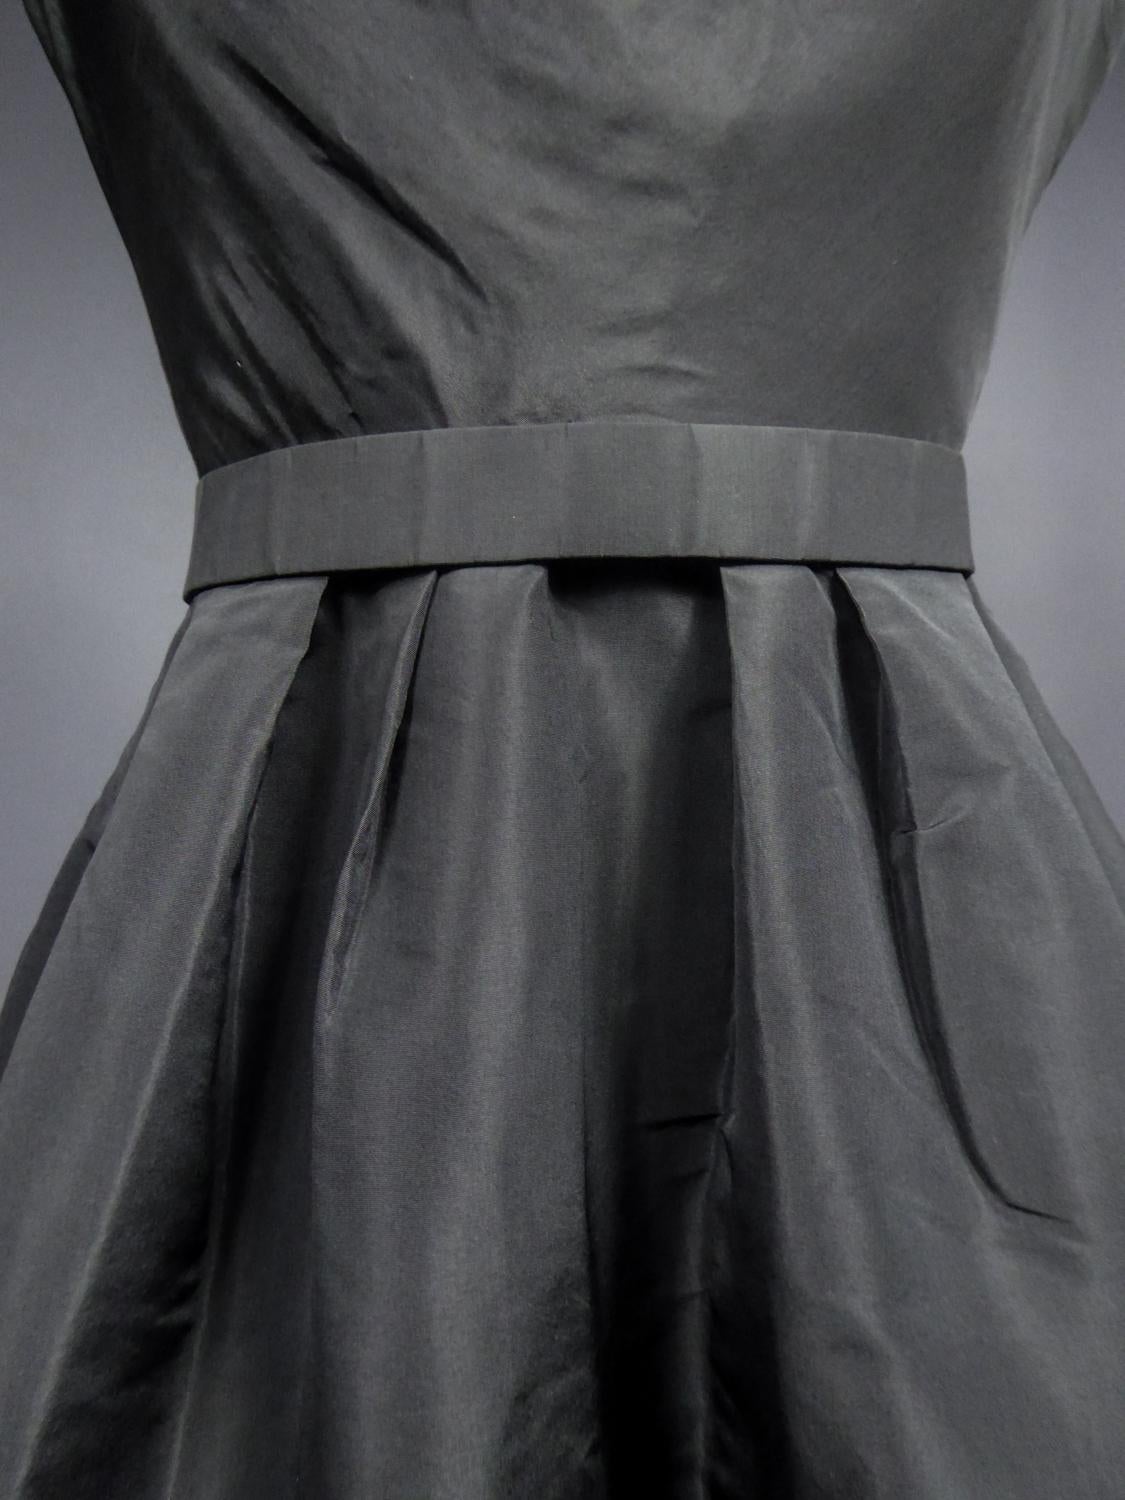 Black Christian Dior/Yves Saint Laurent cocktail dress numbered 1014003 C. 1958/1960